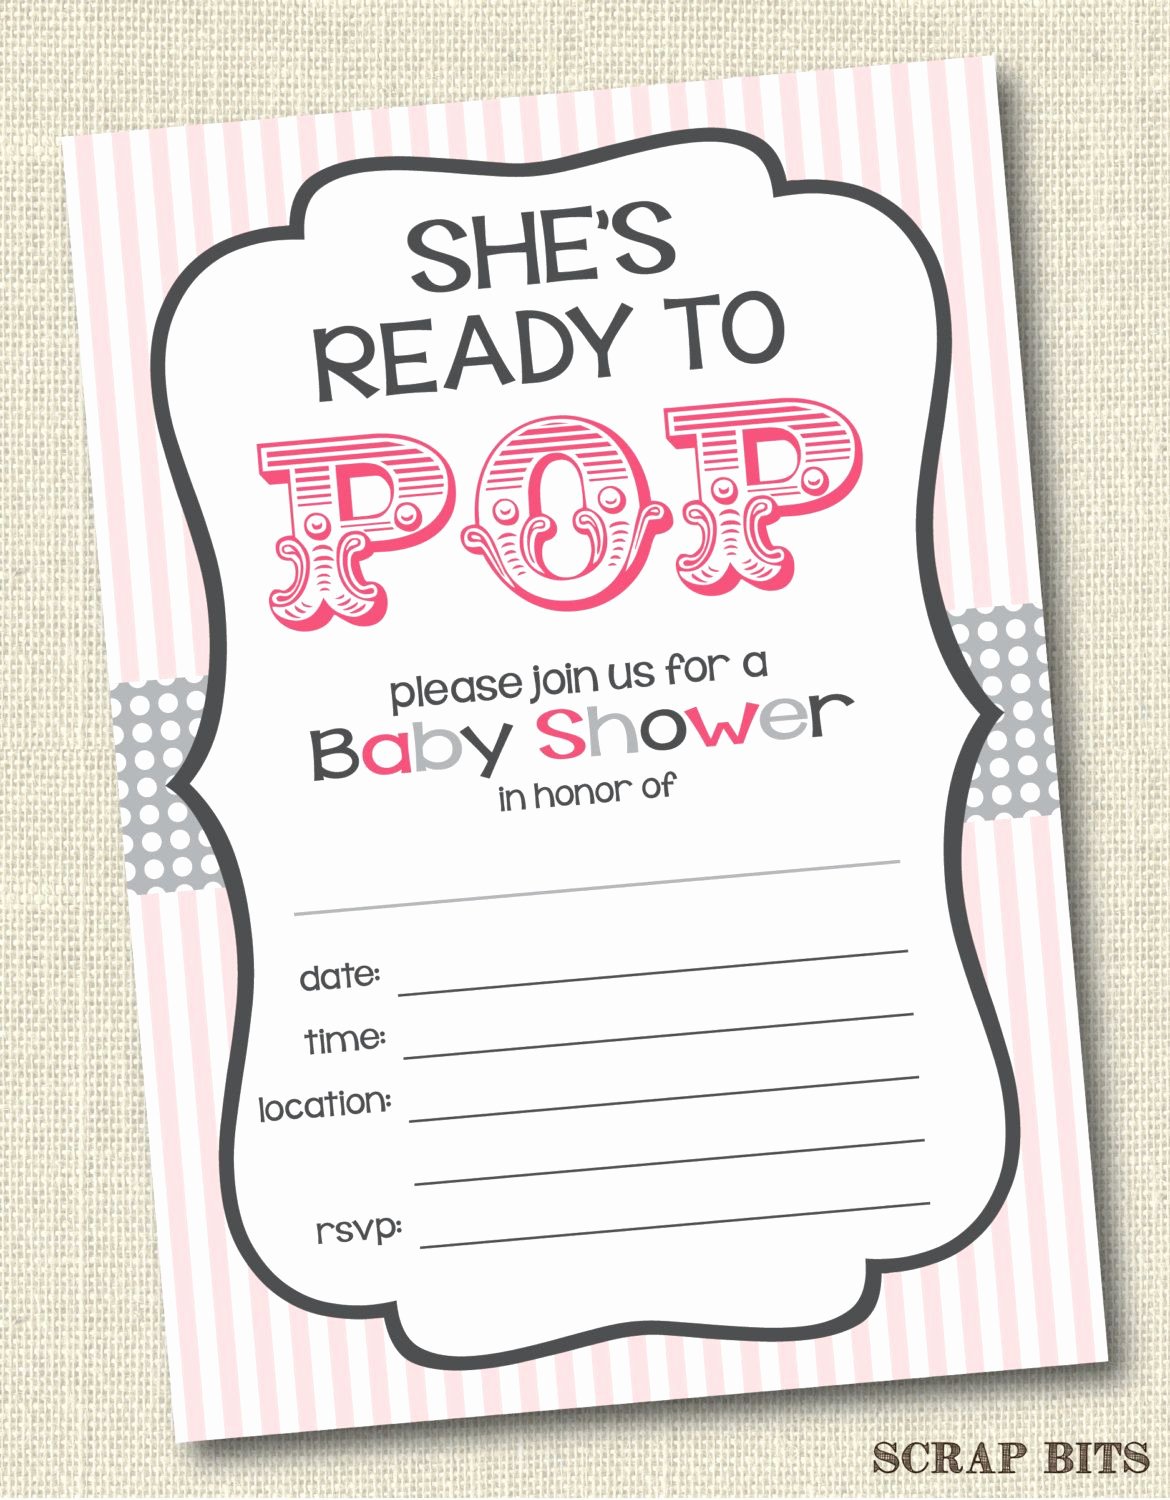 Blank Baby Shower Invitation Template Inspirational Babyshowerinvitation She S Ready to Pop Baby Shower